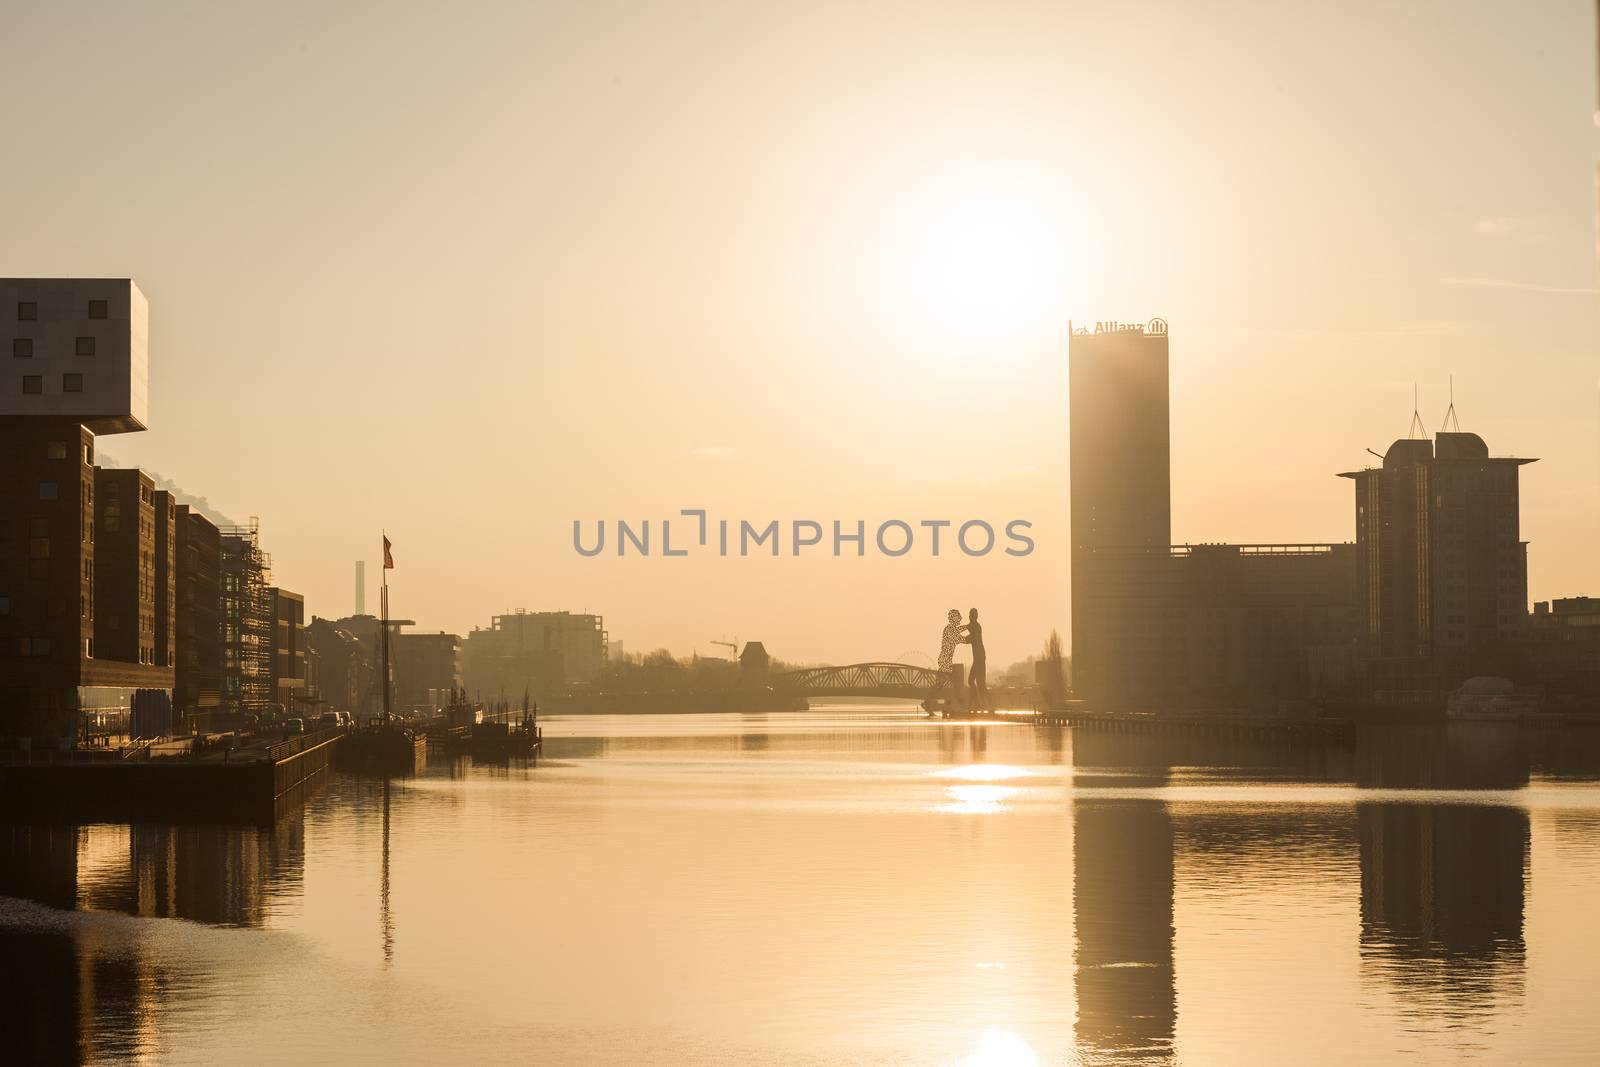 Berlin's River Spree, Molecule Men, and Treptowers at Dawn